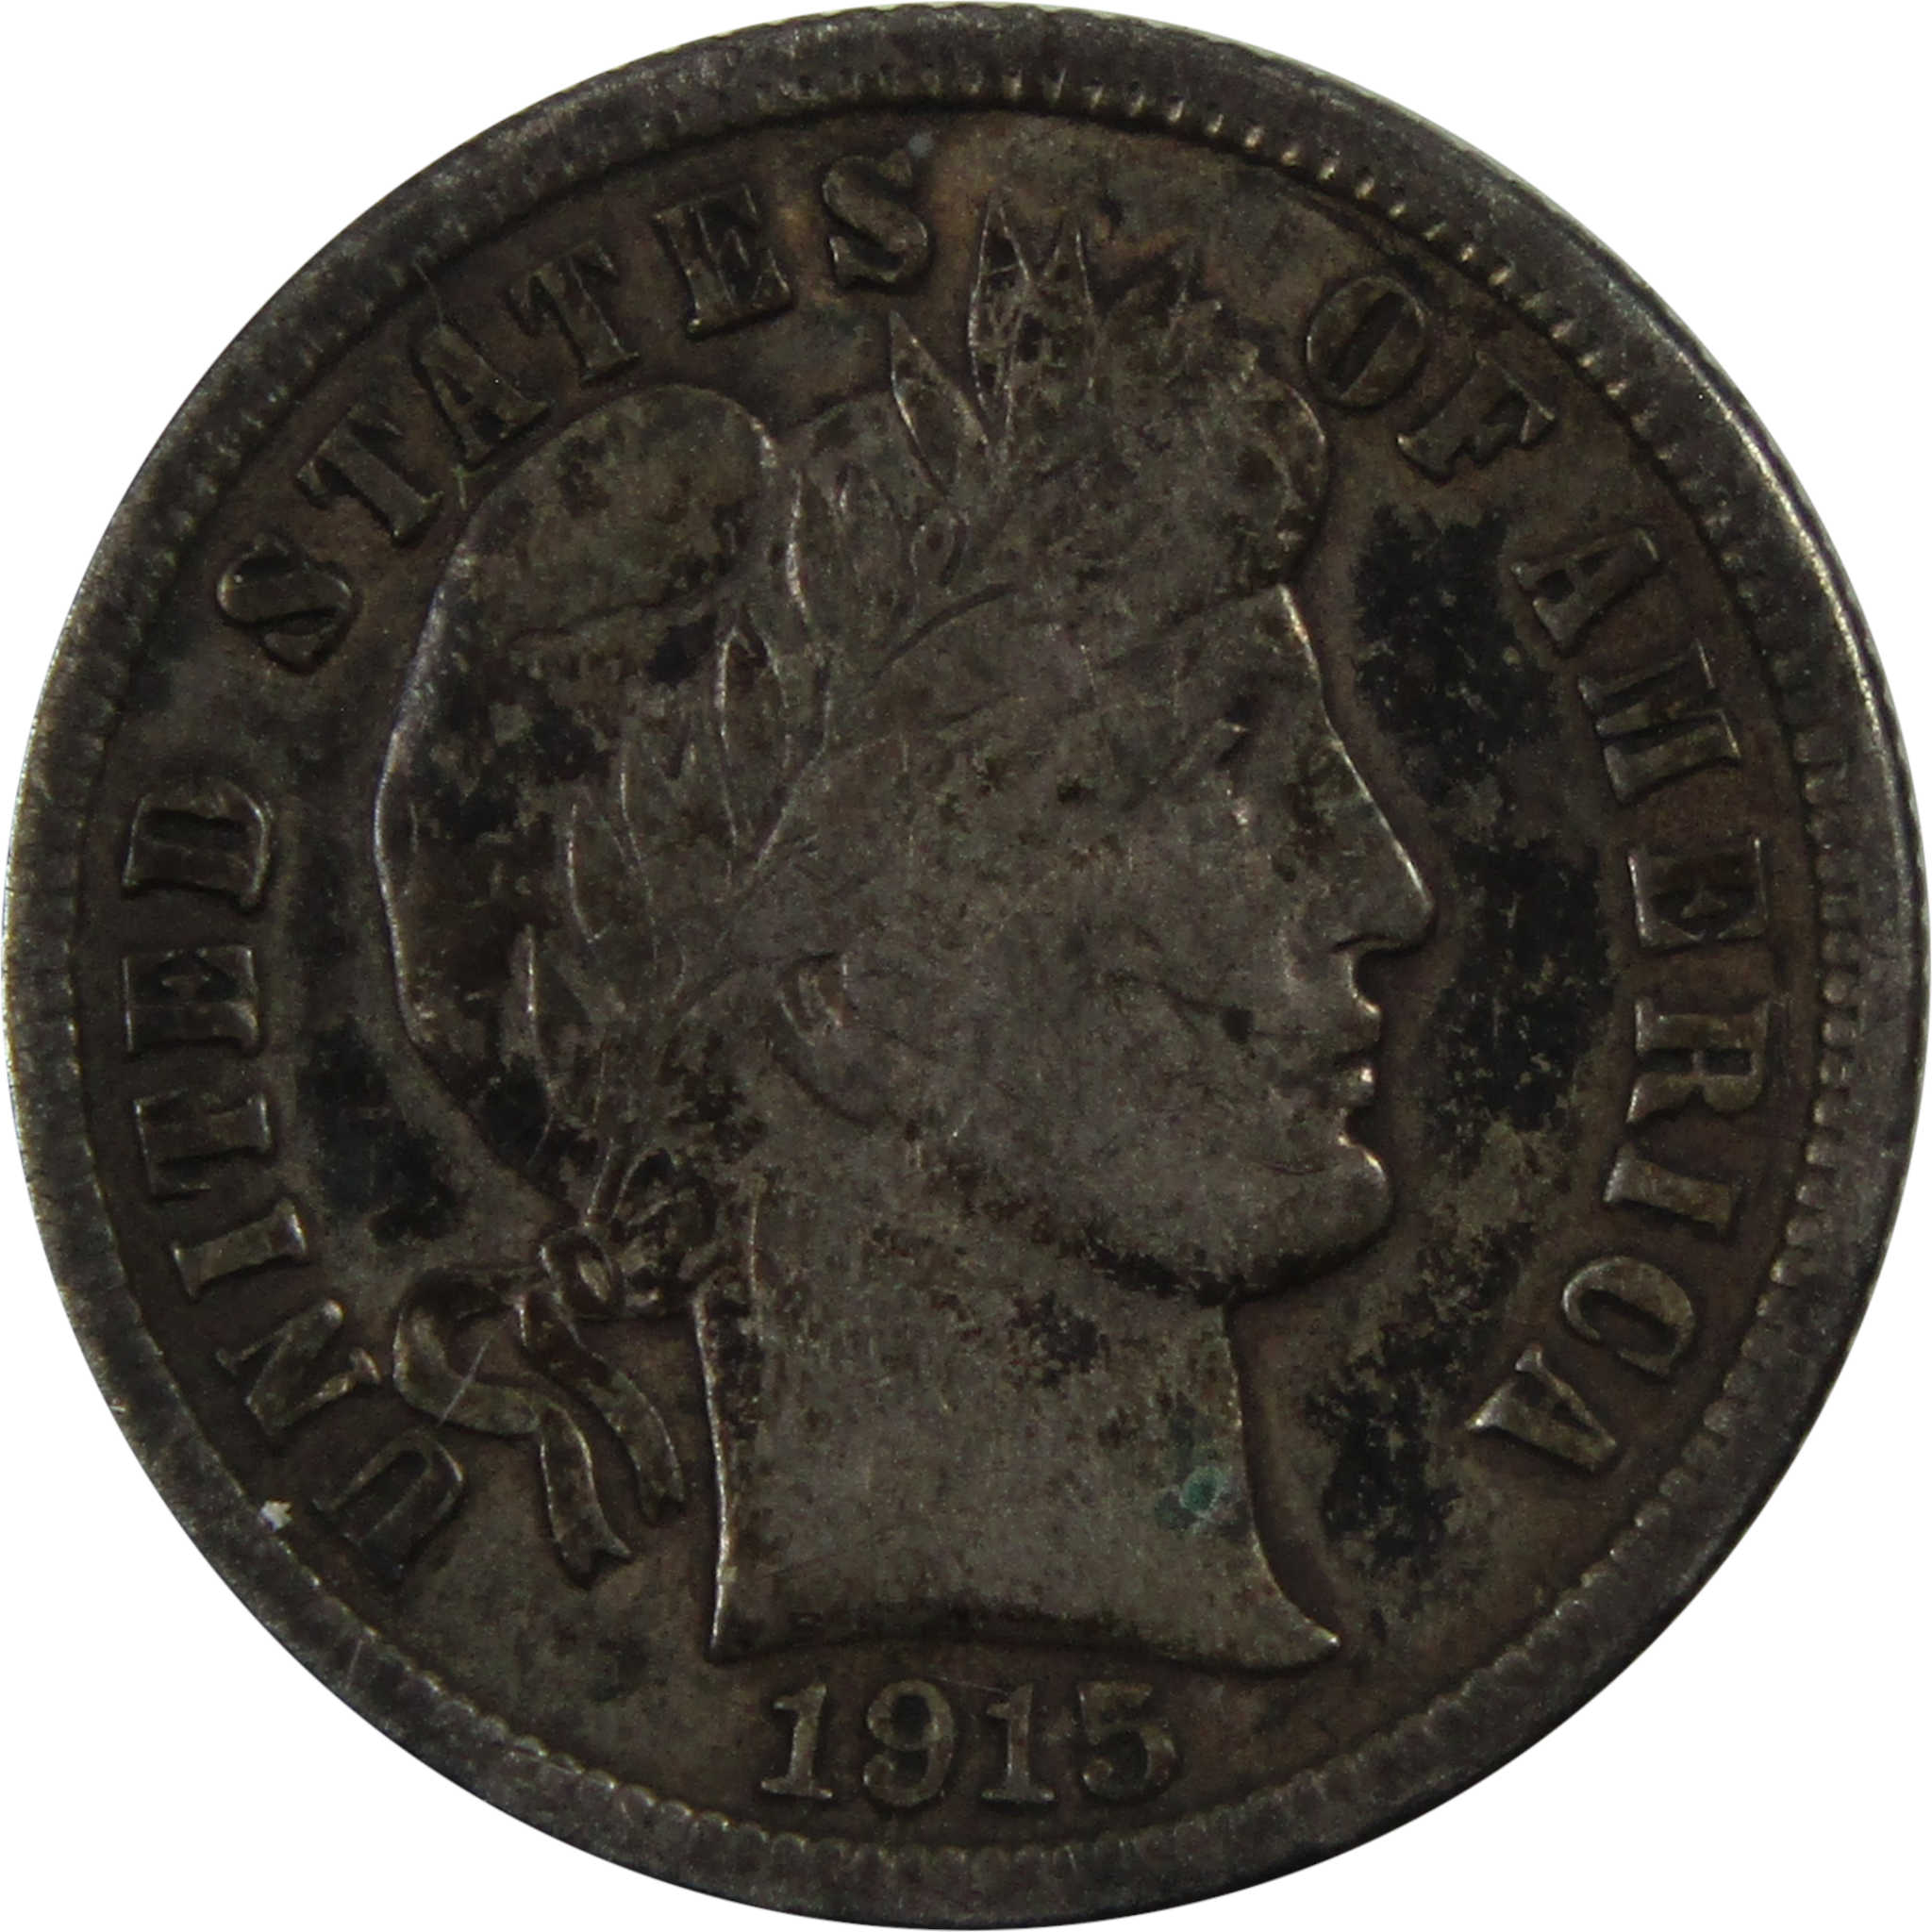 1915 Barber Dime VF Very Fine 90% Silver 10c Coin SKU:I4714